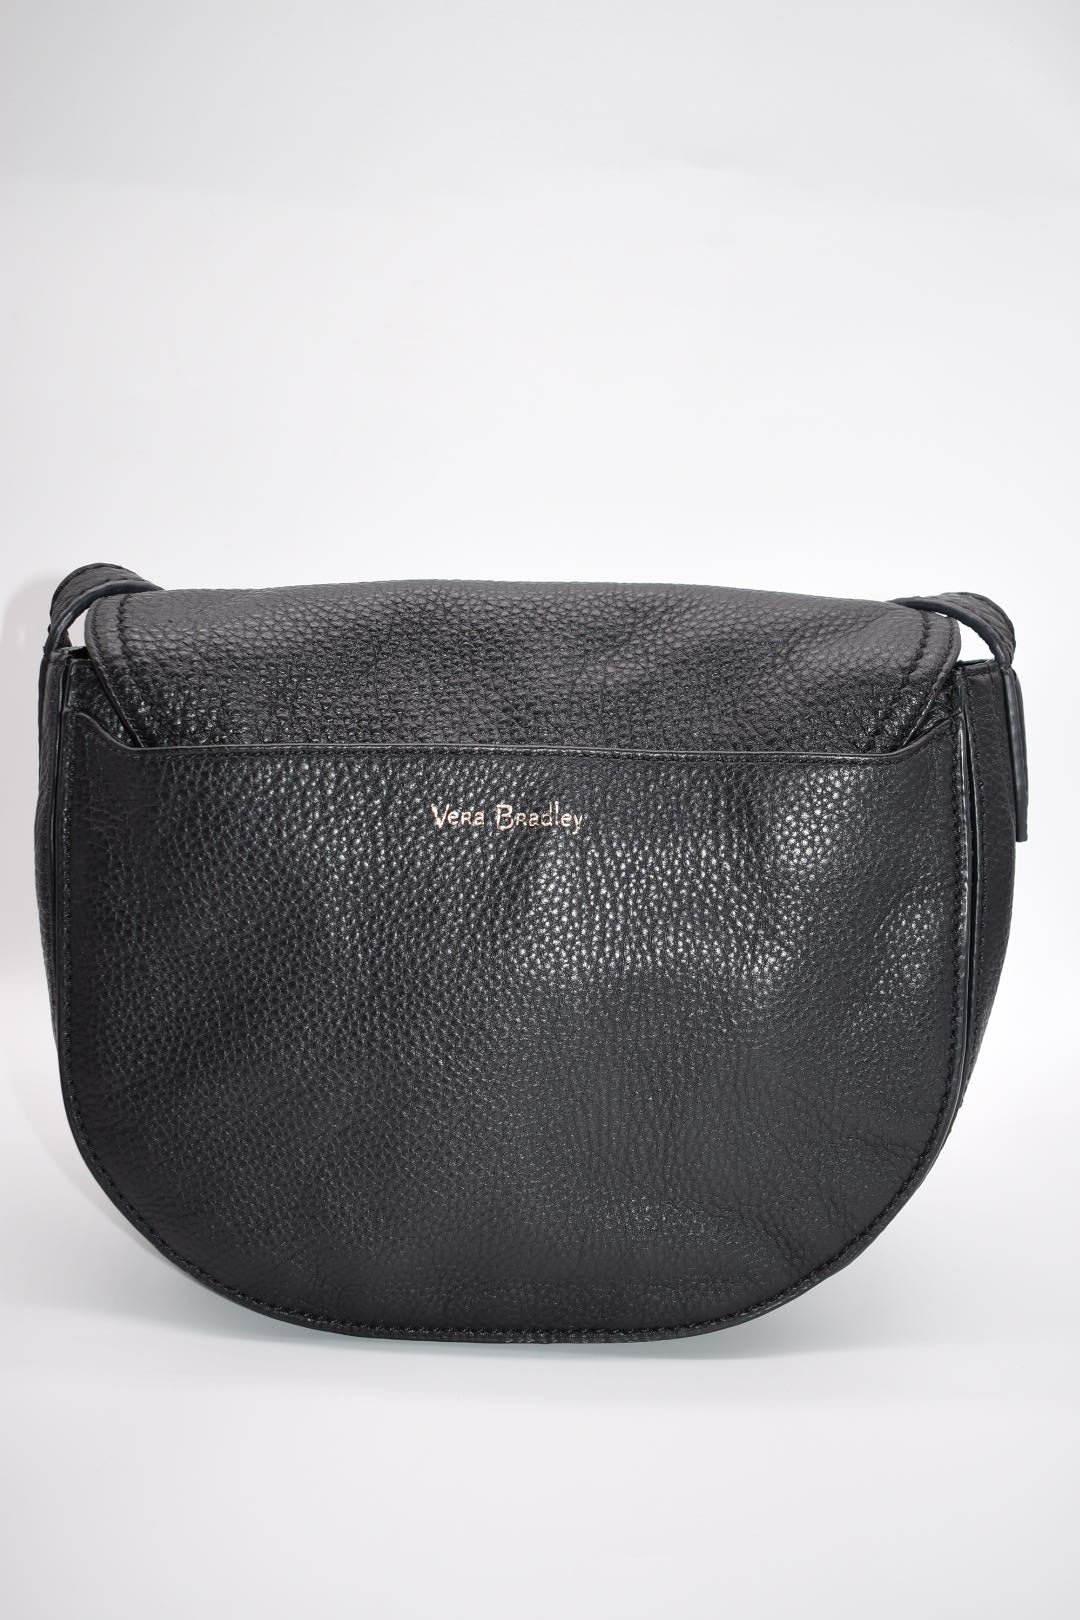 Vera Bradley EUC Triple zipper crossbody bag - blue, black, white, grey  print